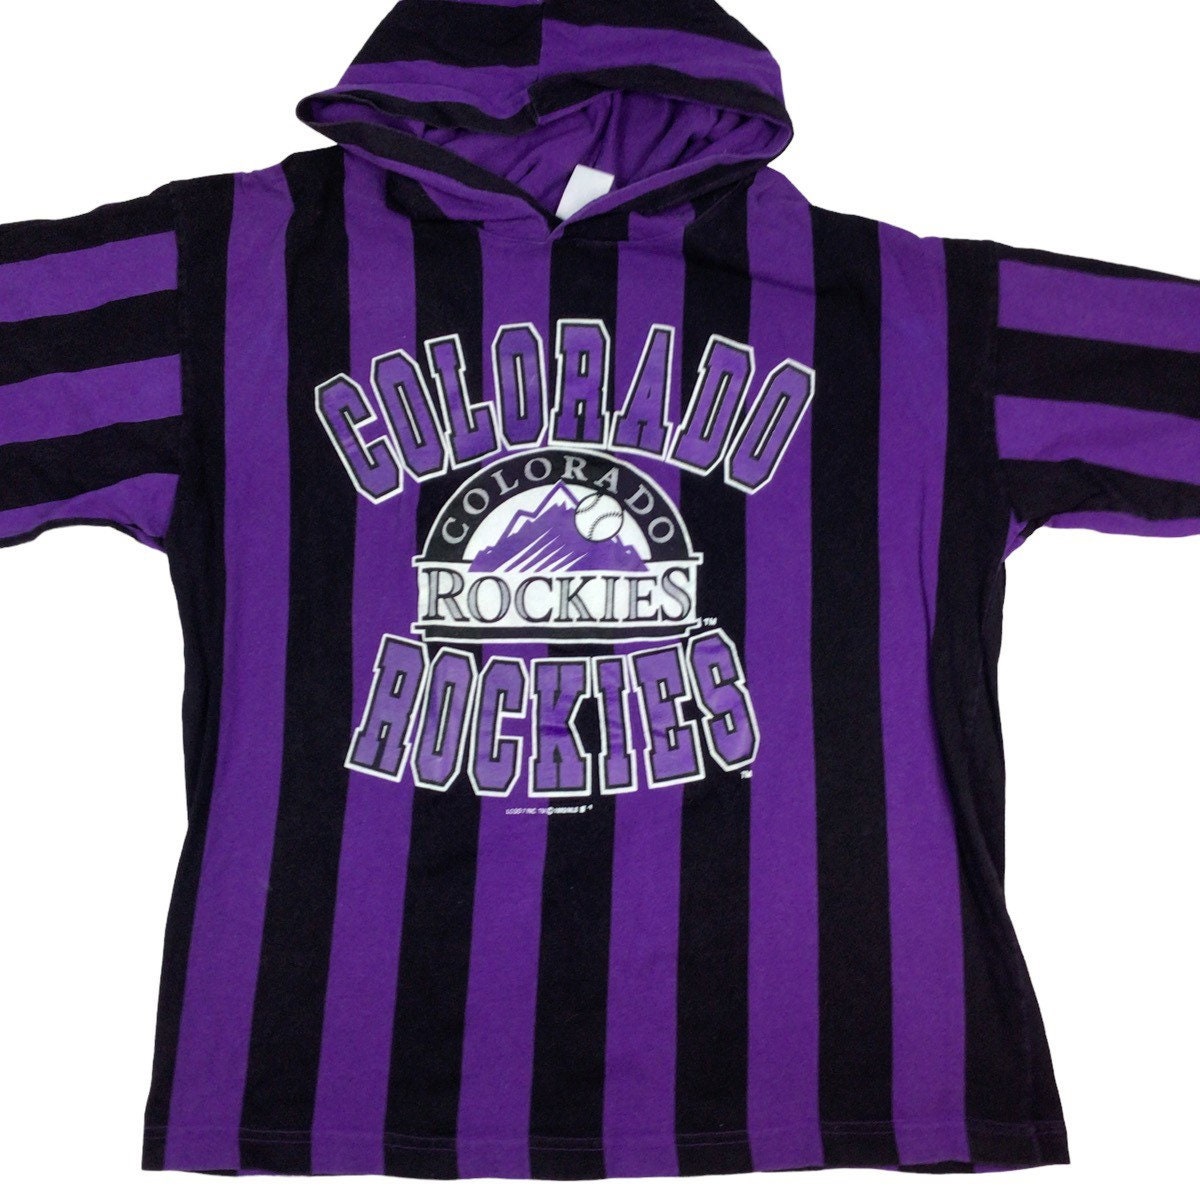 Colorado Rockies Stitches Button-Up Jersey - Black/Purple